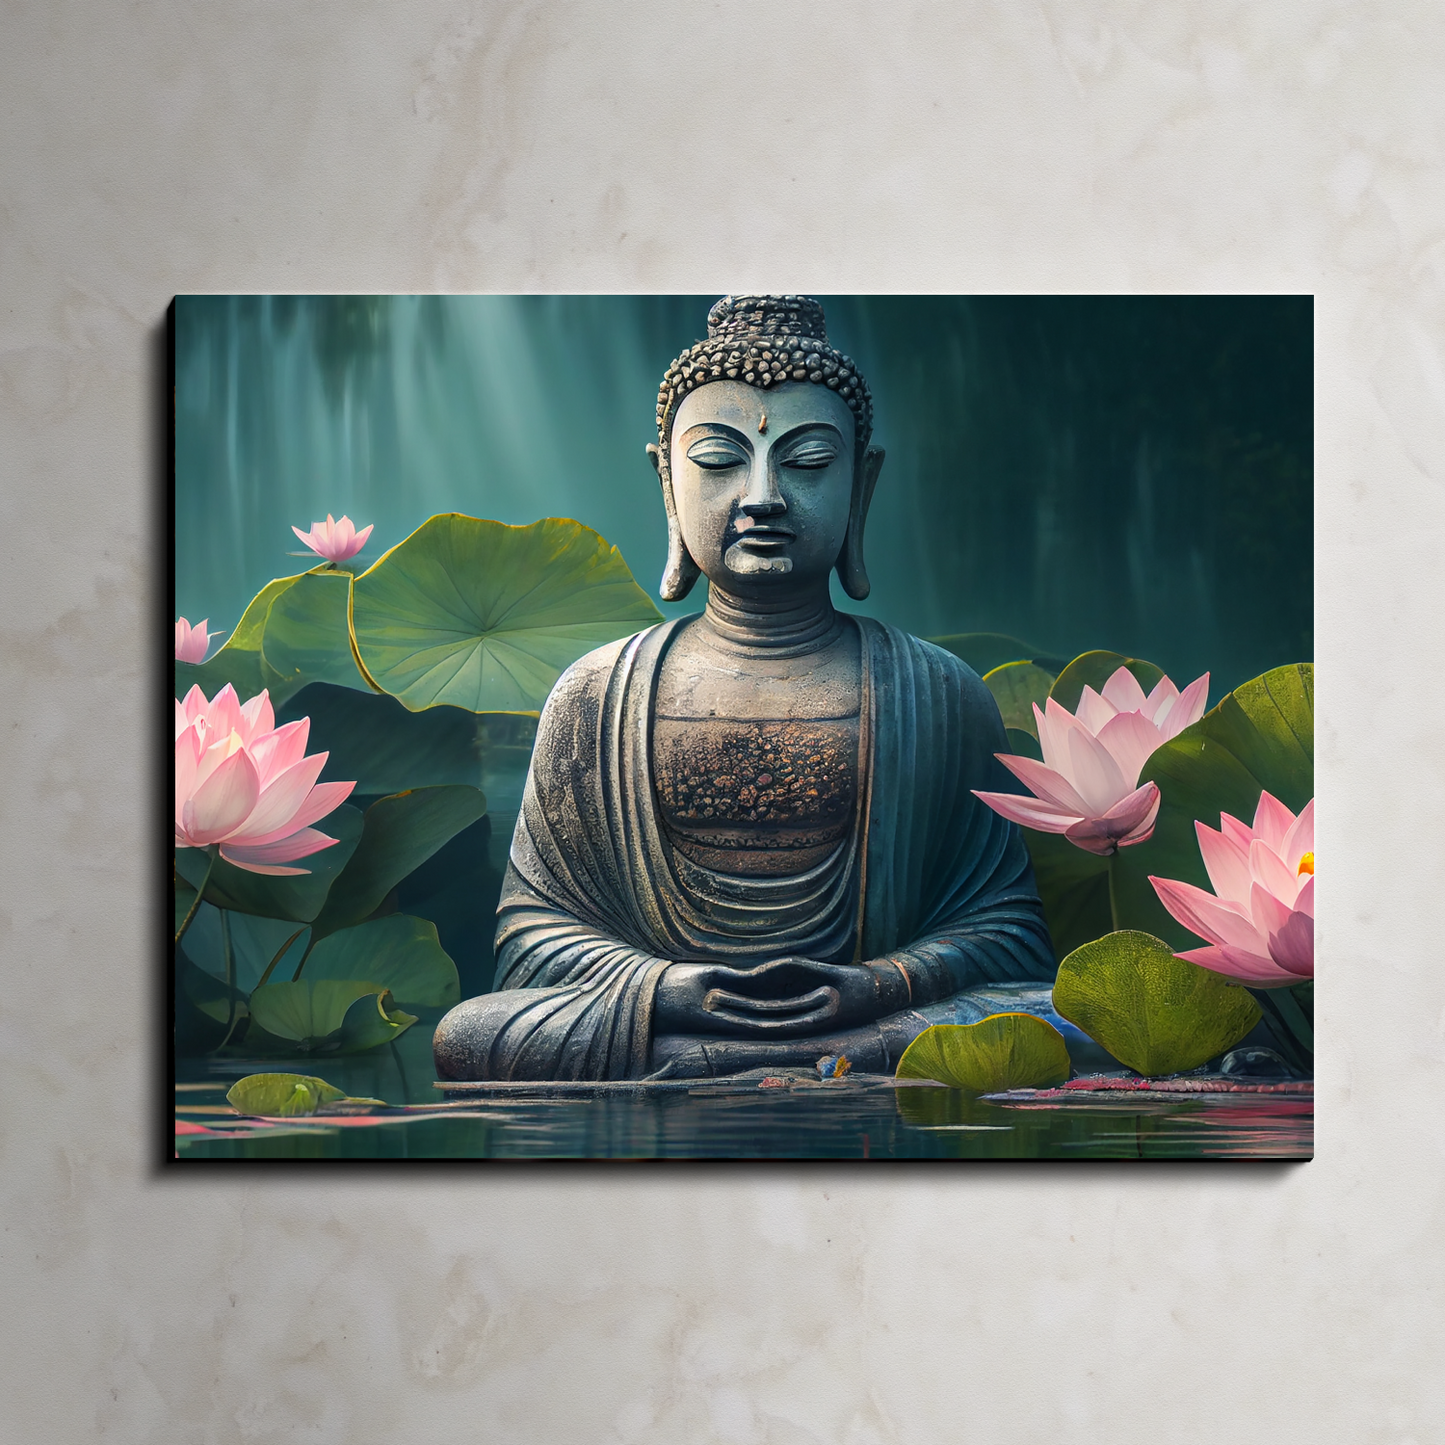 Buddha Meditating in Water Wood Print Wall Art